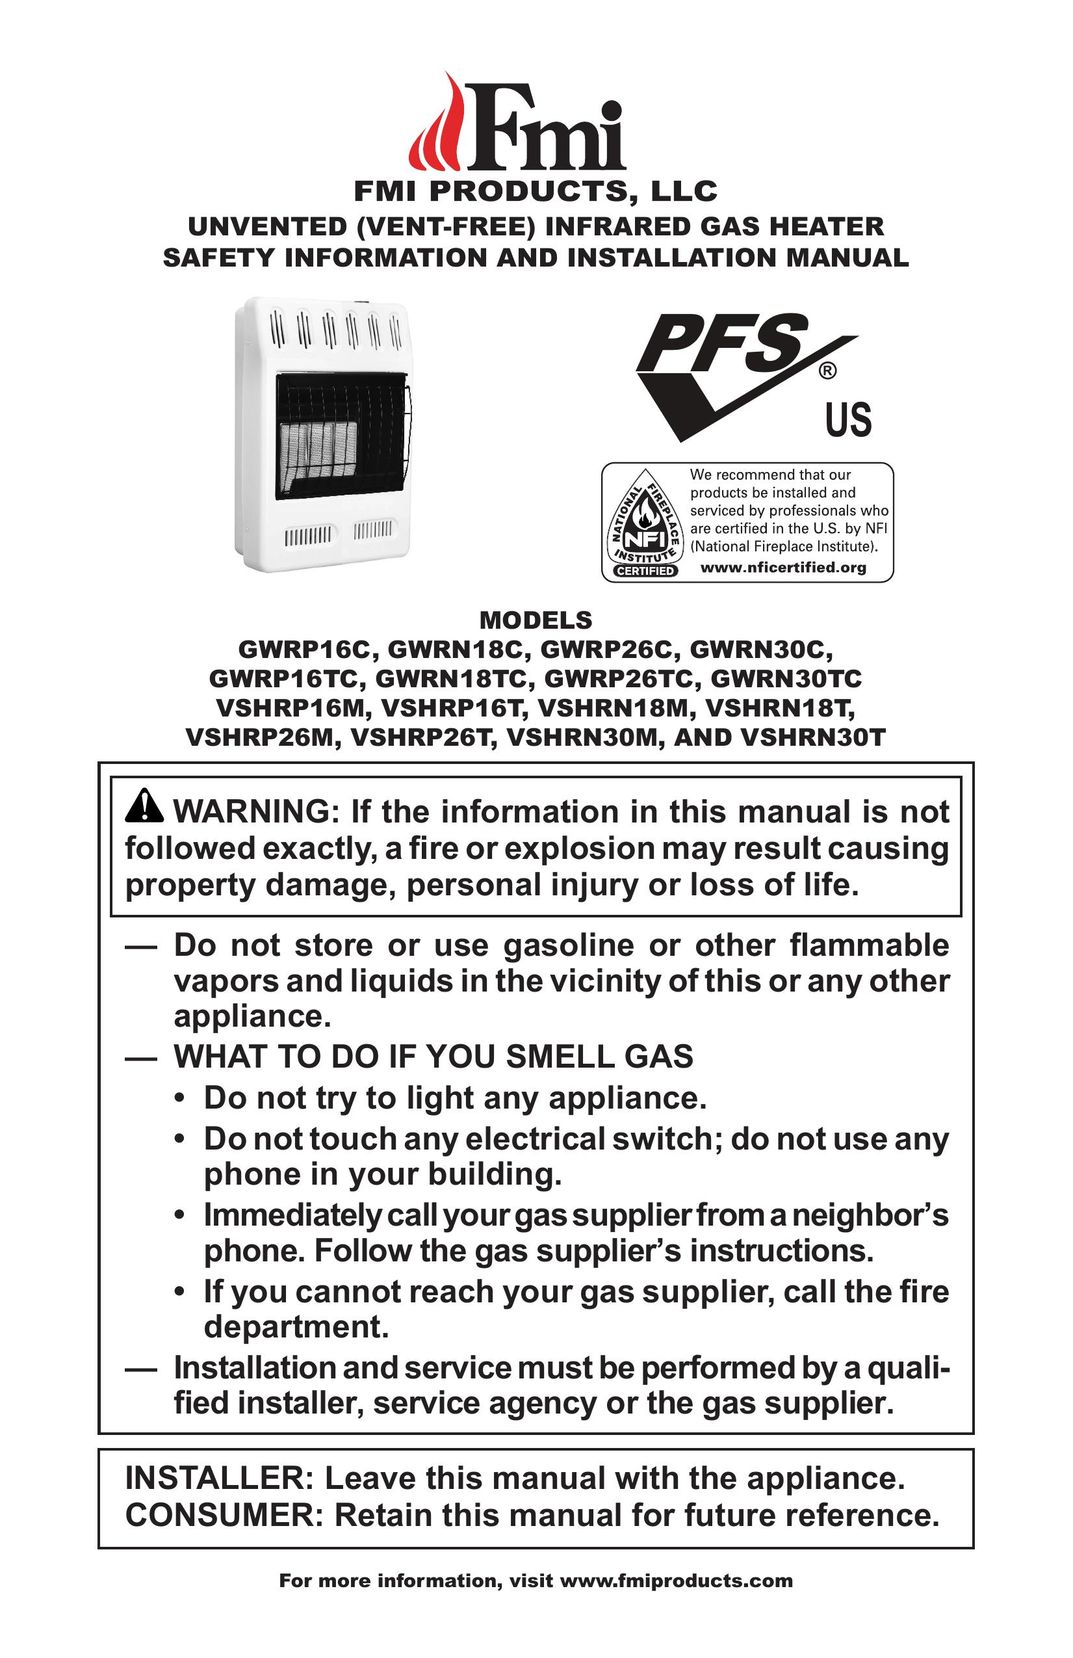 FMI GWRN18C Gas Heater User Manual